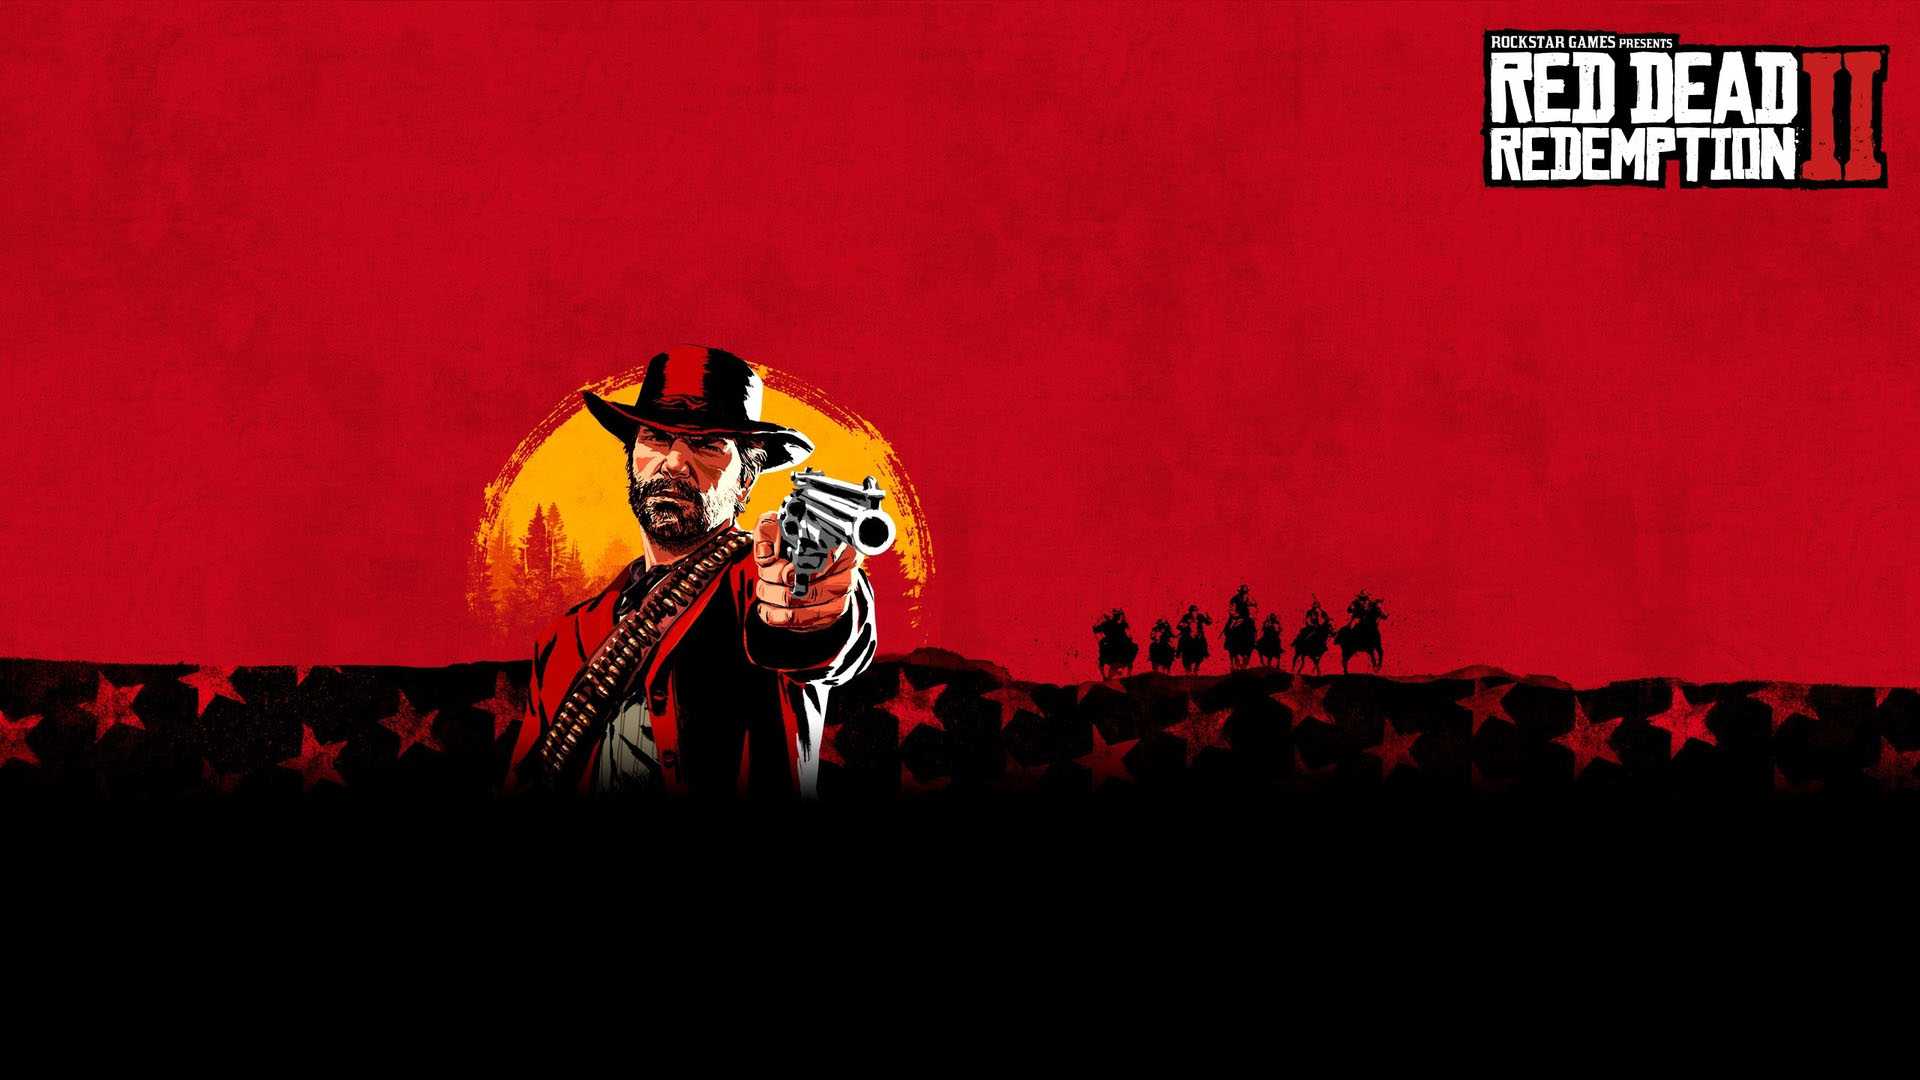 HD Red Dead Redemption 2 Wallpaper - iXpap